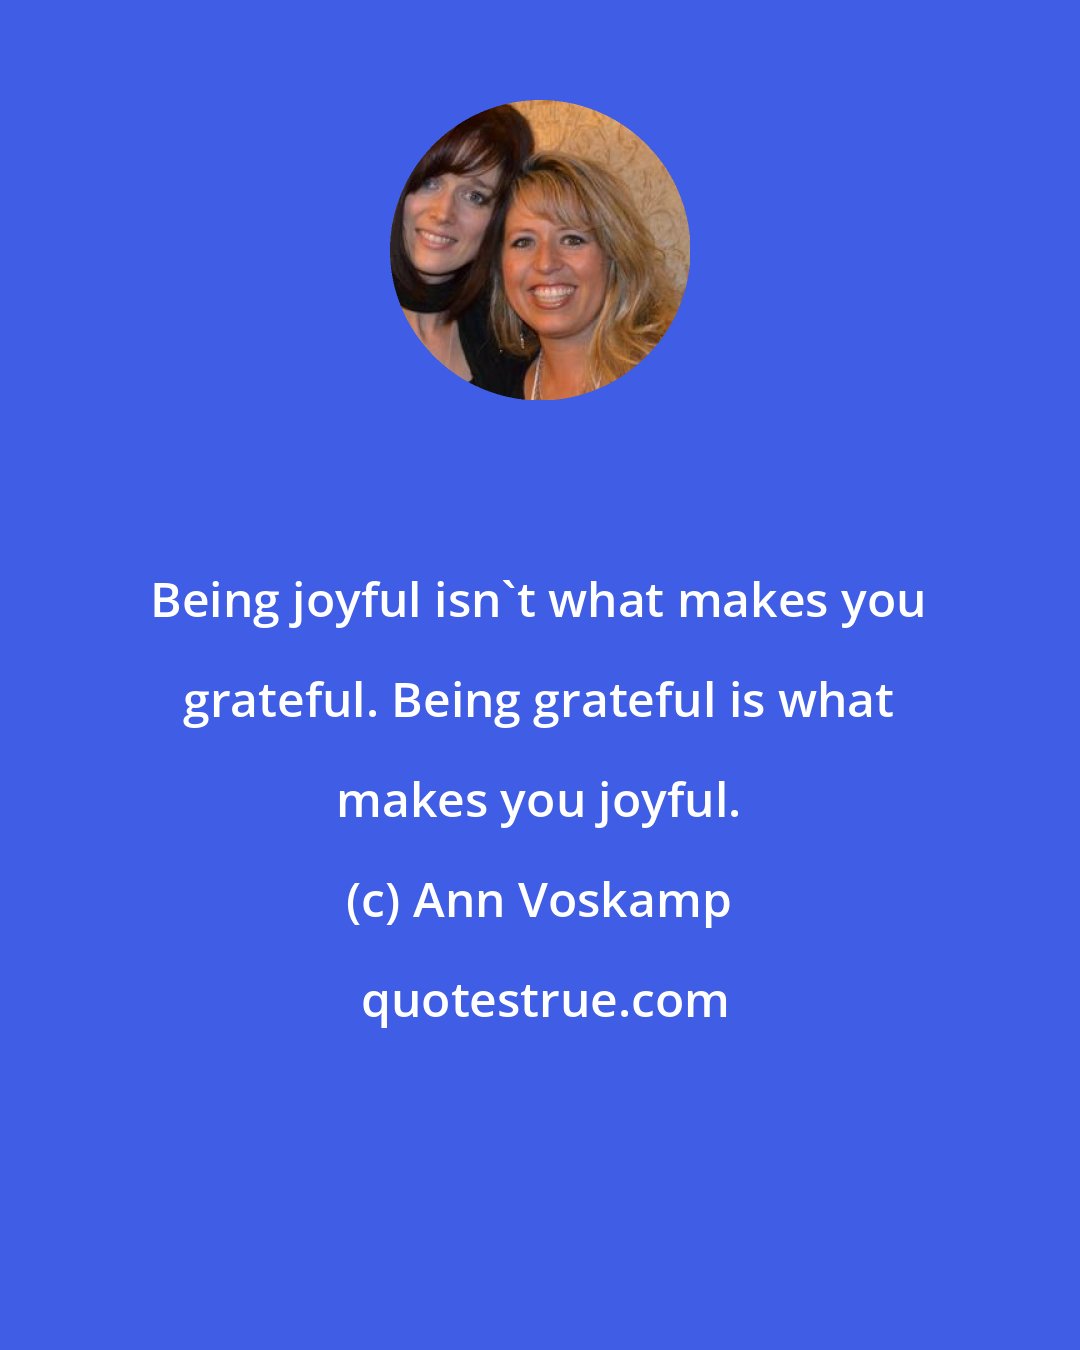 Ann Voskamp: Being joyful isn't what makes you grateful. Being grateful is what makes you joyful.